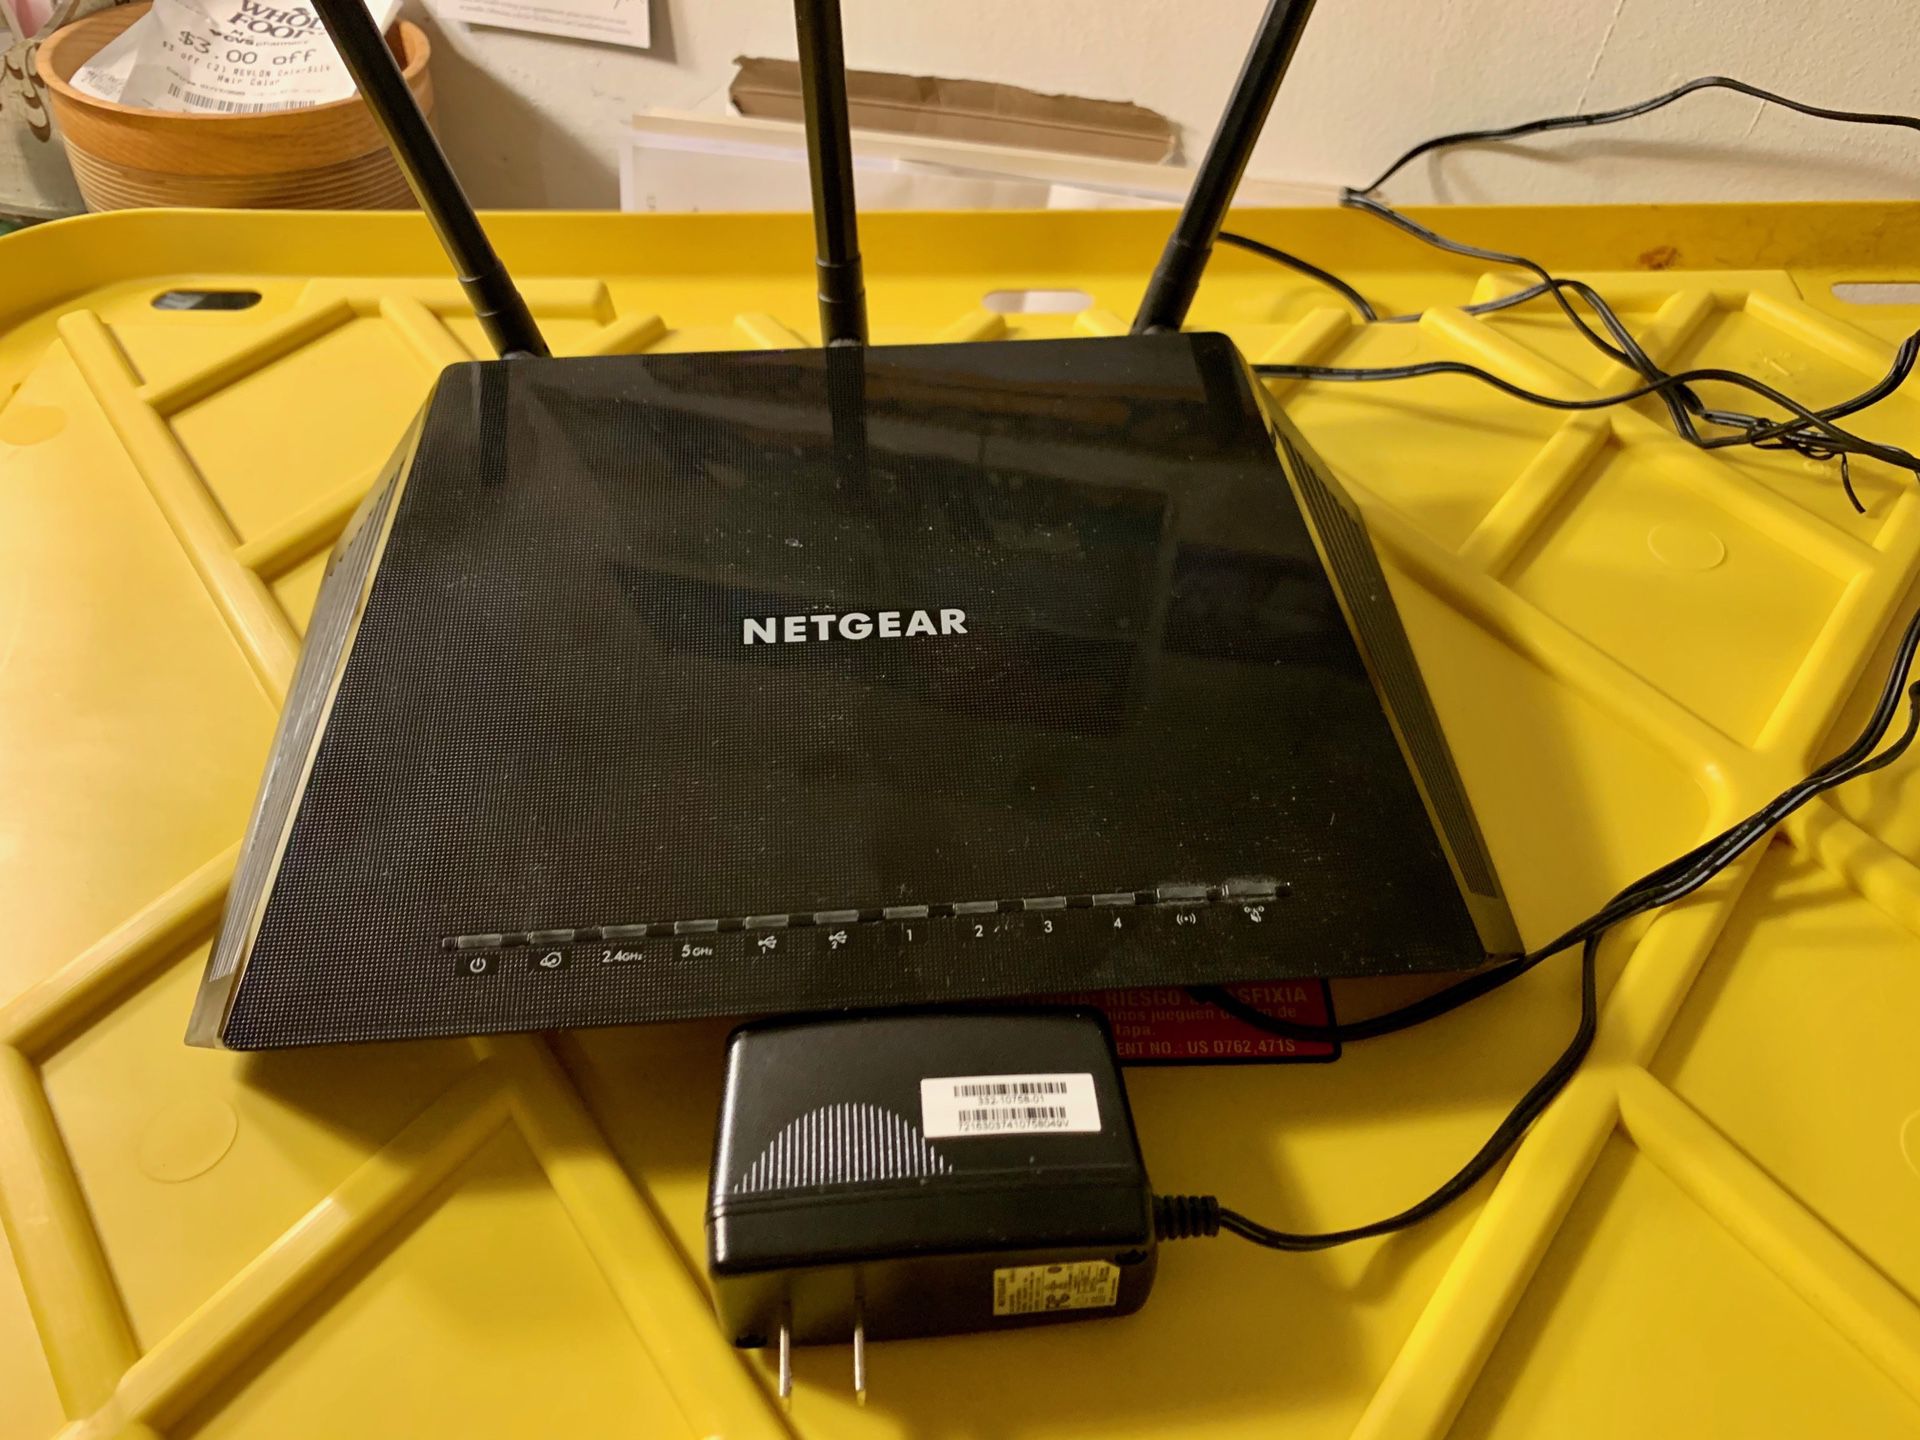 Netgear ac1750 smart Wi-Fi Router.